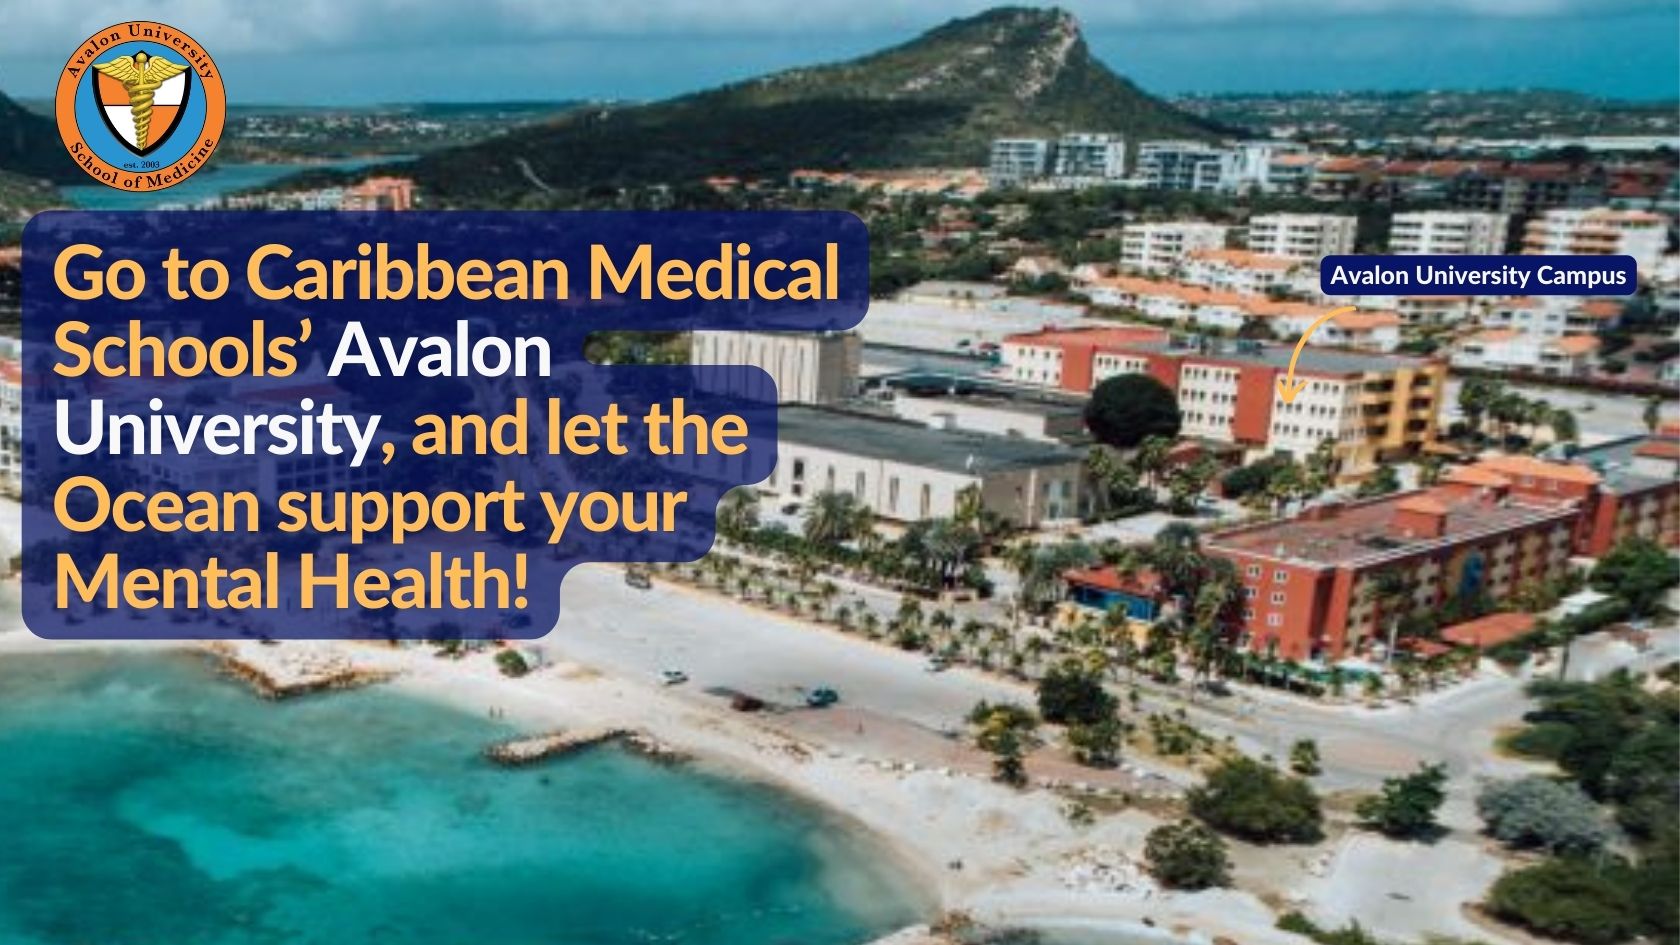 Caribbean Medical Schools - Avalon University Campus